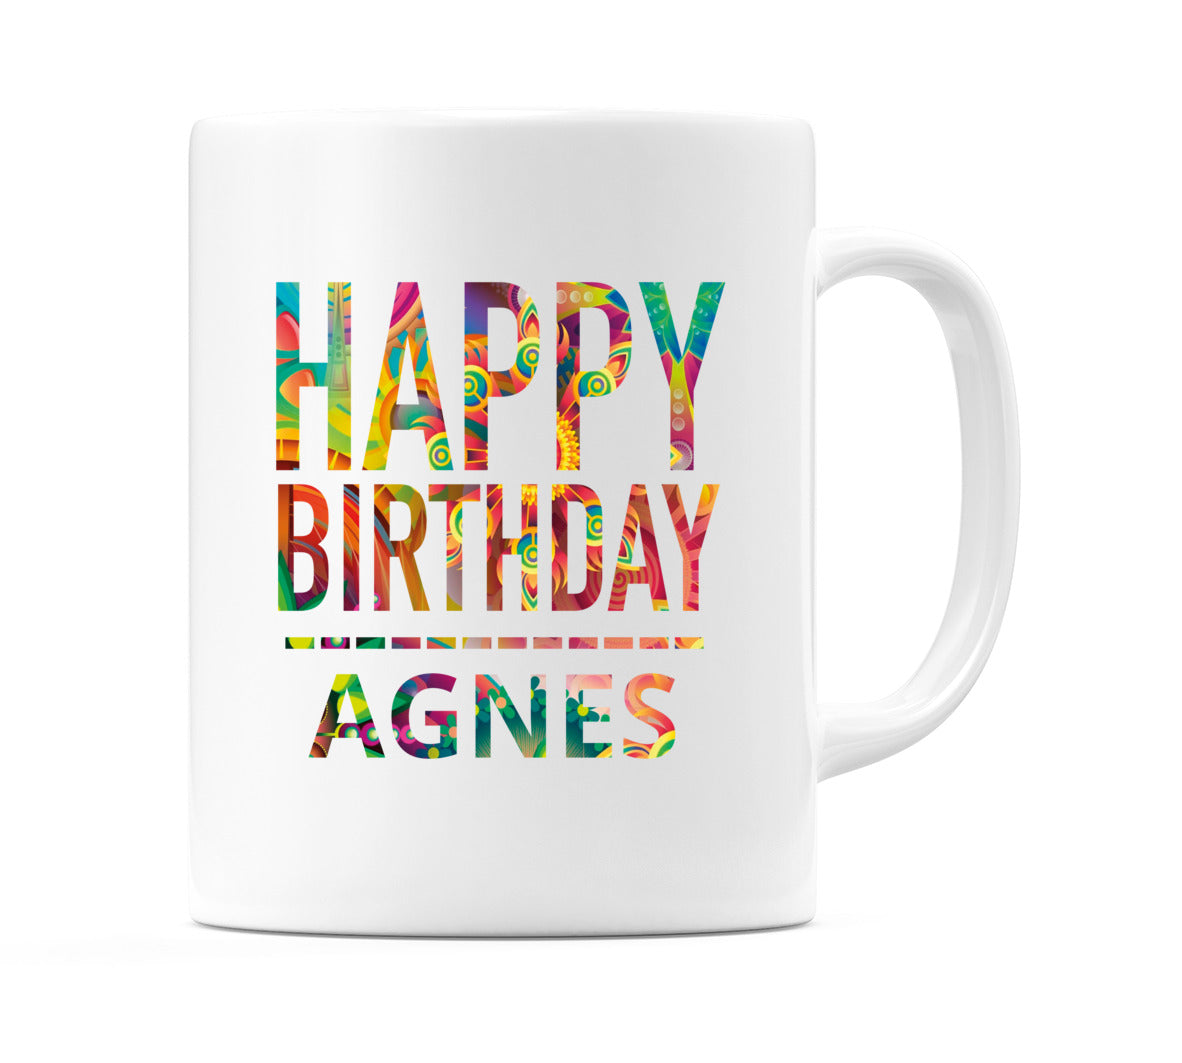 Happy Birthday Agnes (Tie Dye Effect) Mug Cup by WeDoMugs